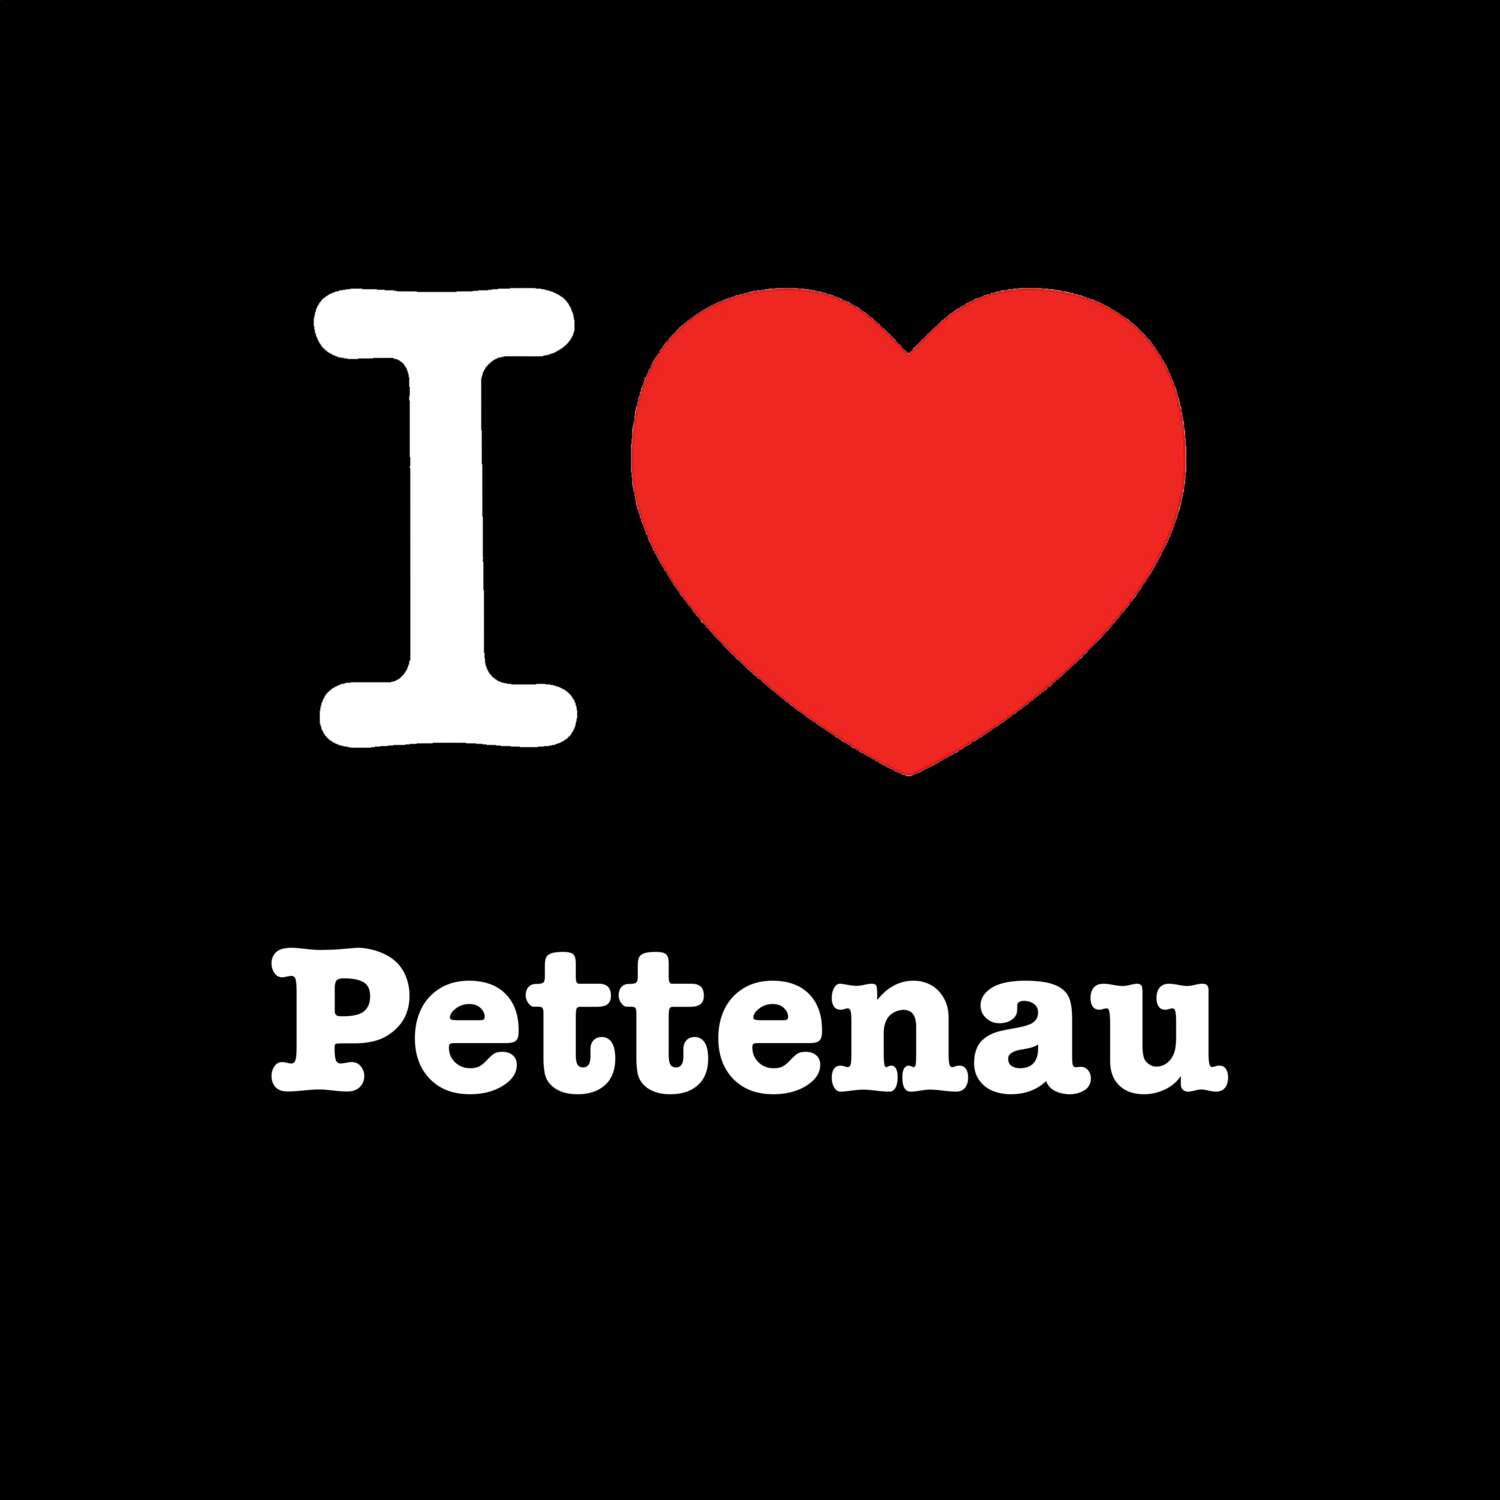 Pettenau T-Shirt »I love«